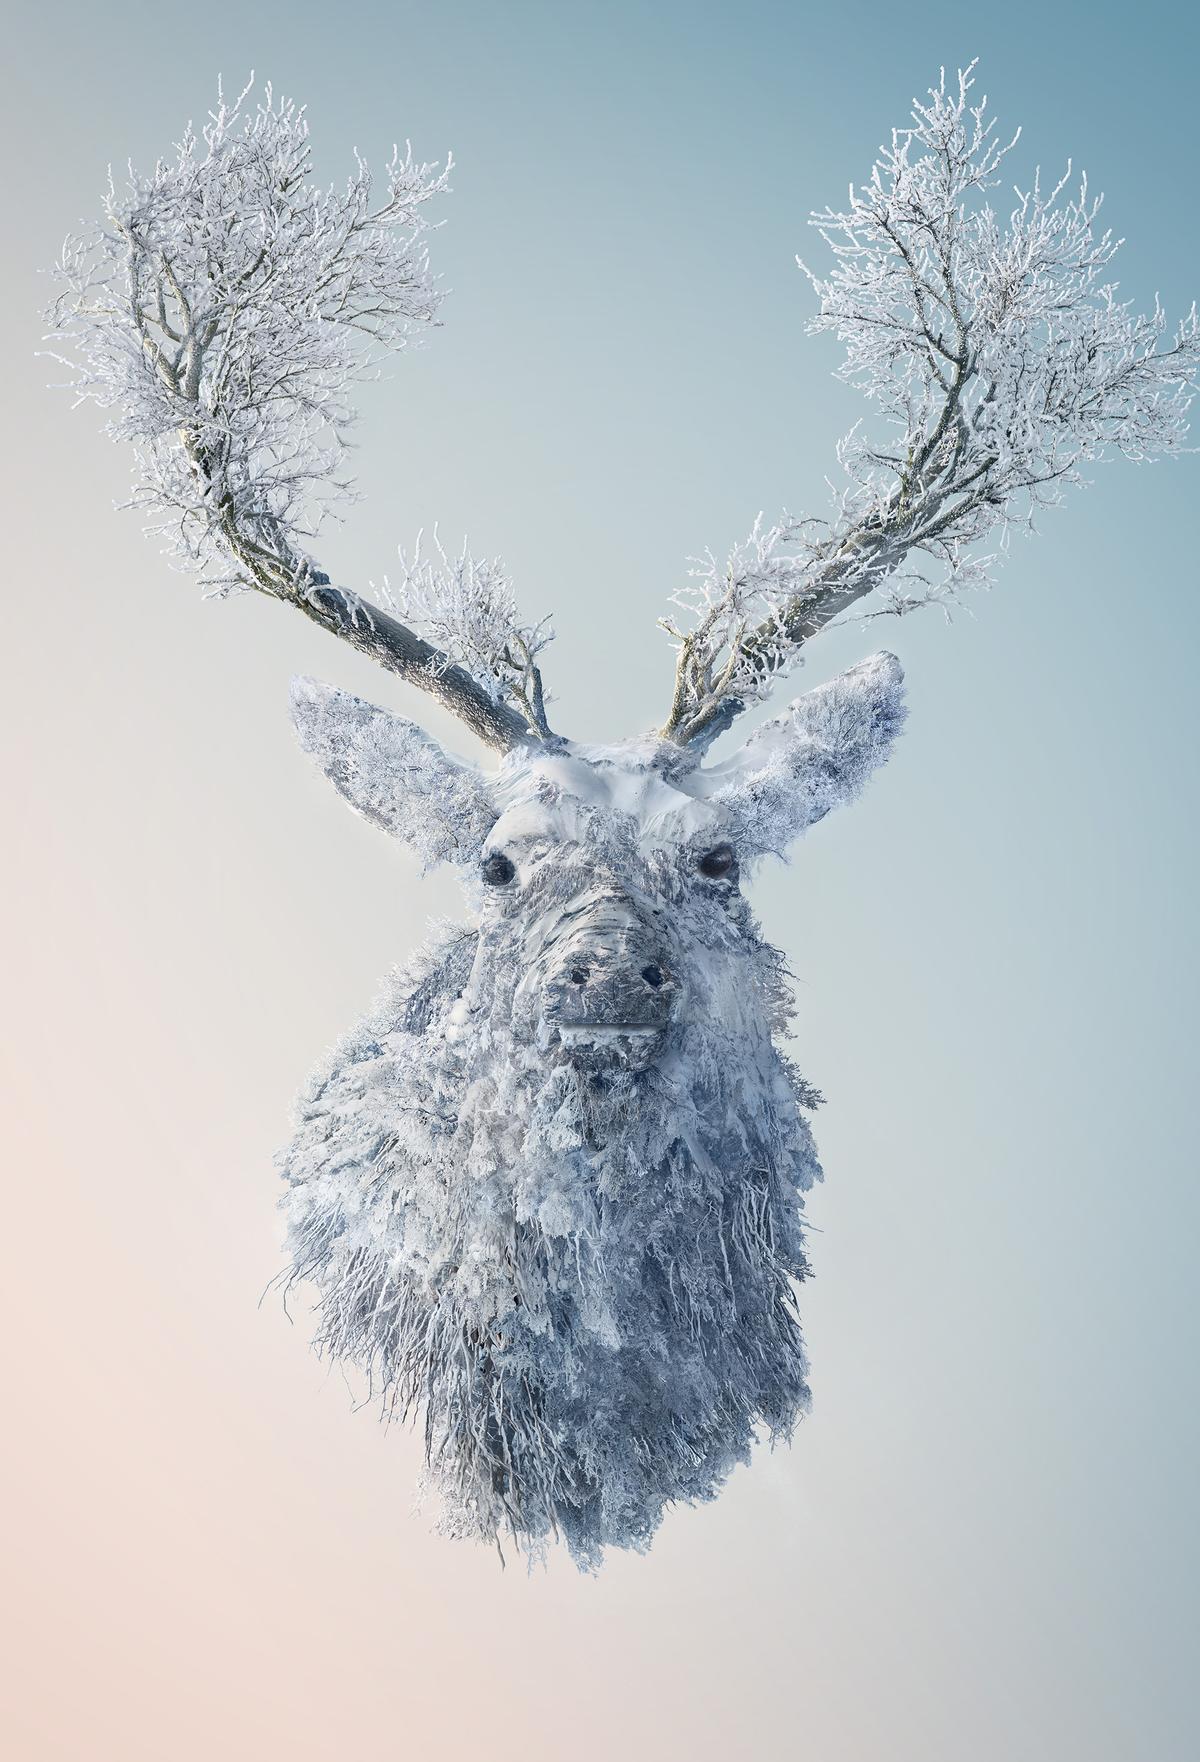 Winter landscape photos are transformed into a stag shot taken in Scotland. (Courtesy of <a href="https://www.instagram.com/joshdykgraaf/">Josh Dykgraaf</a>)